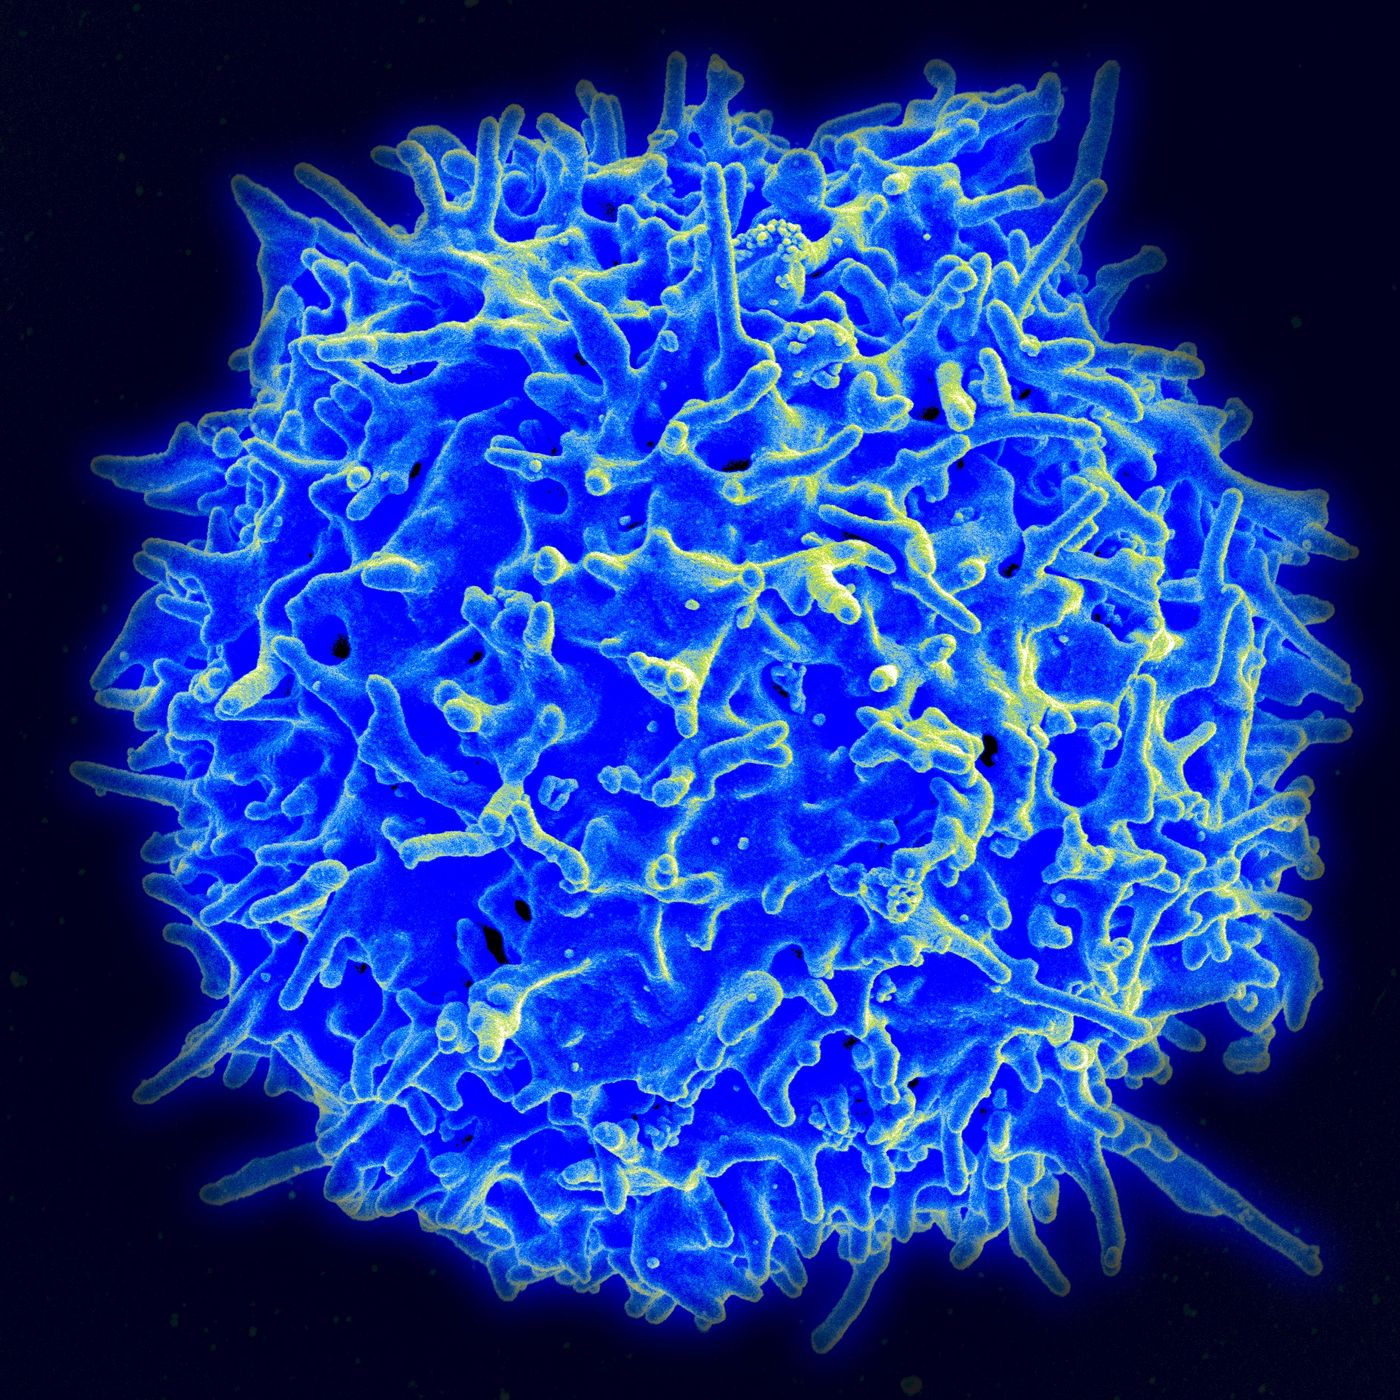 A healthy T lymphocyte